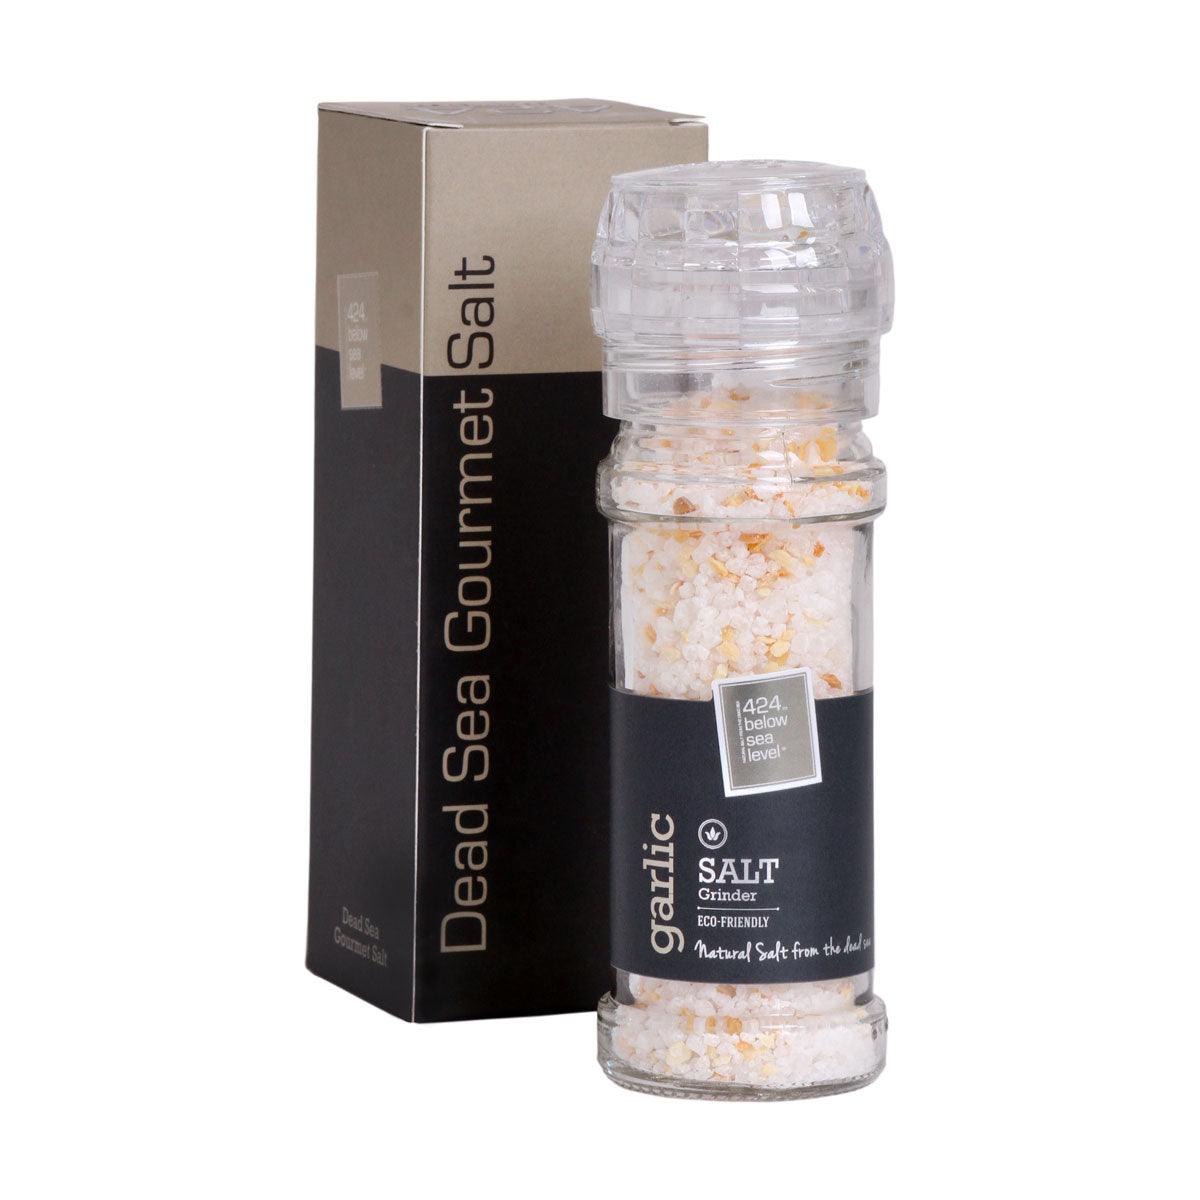 Platinum Garlic Gourmet Salt From The Dead Sea - Spring Nahal